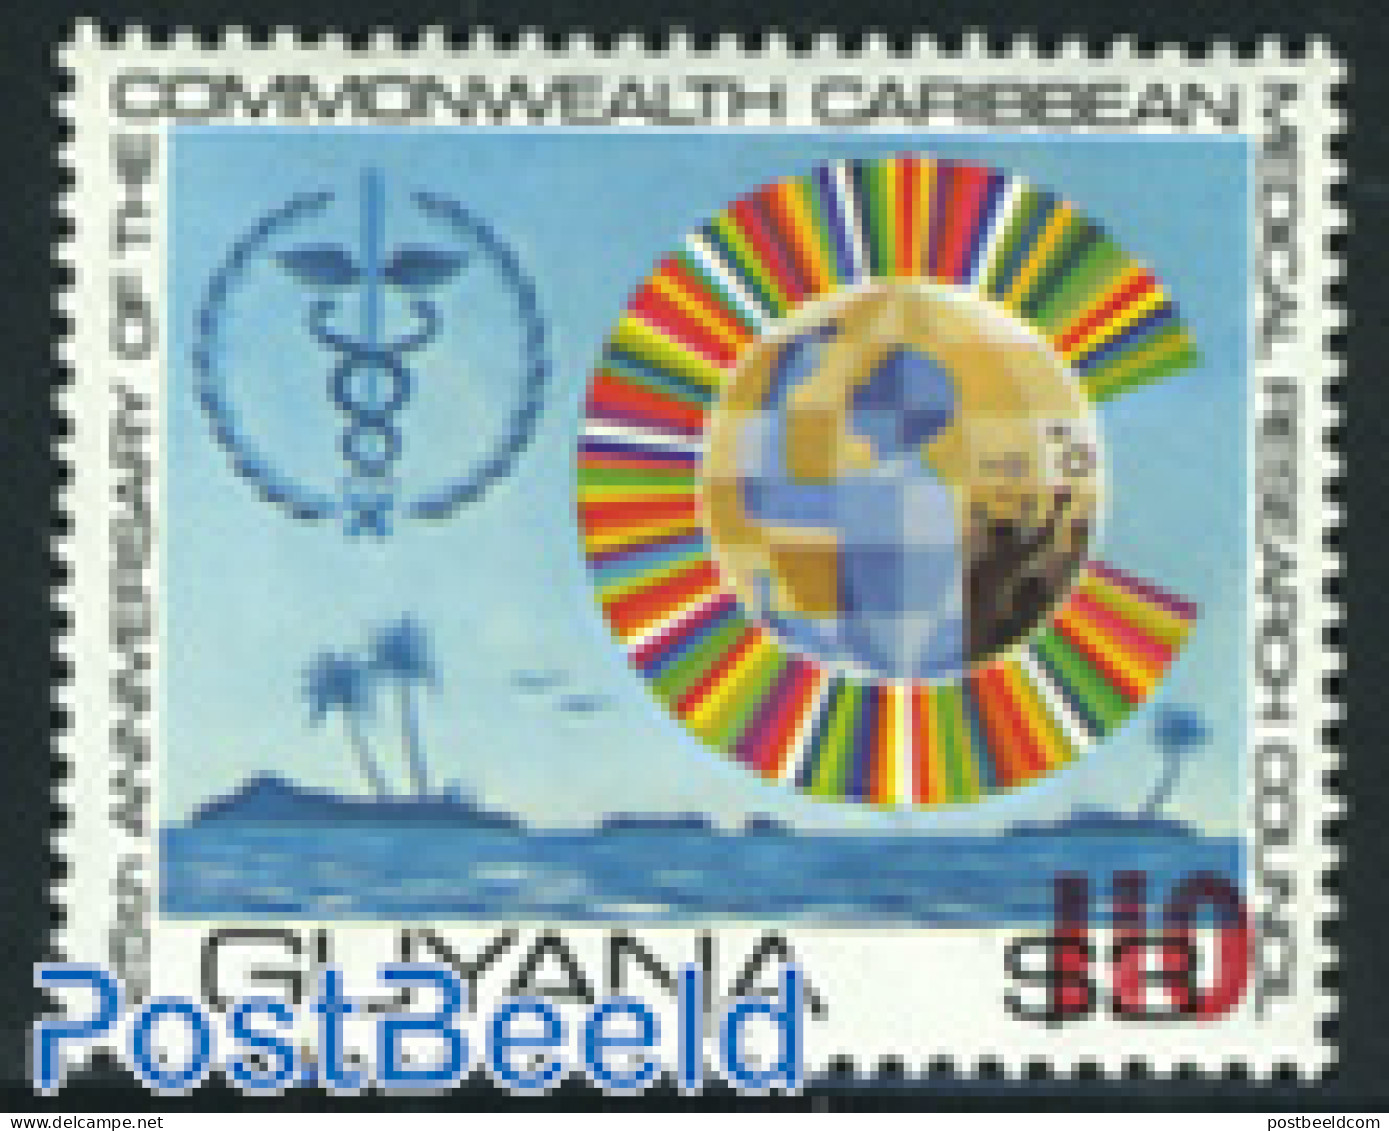 Guyana 1981 Stamp Out Of Set, Mint NH - Guyana (1966-...)